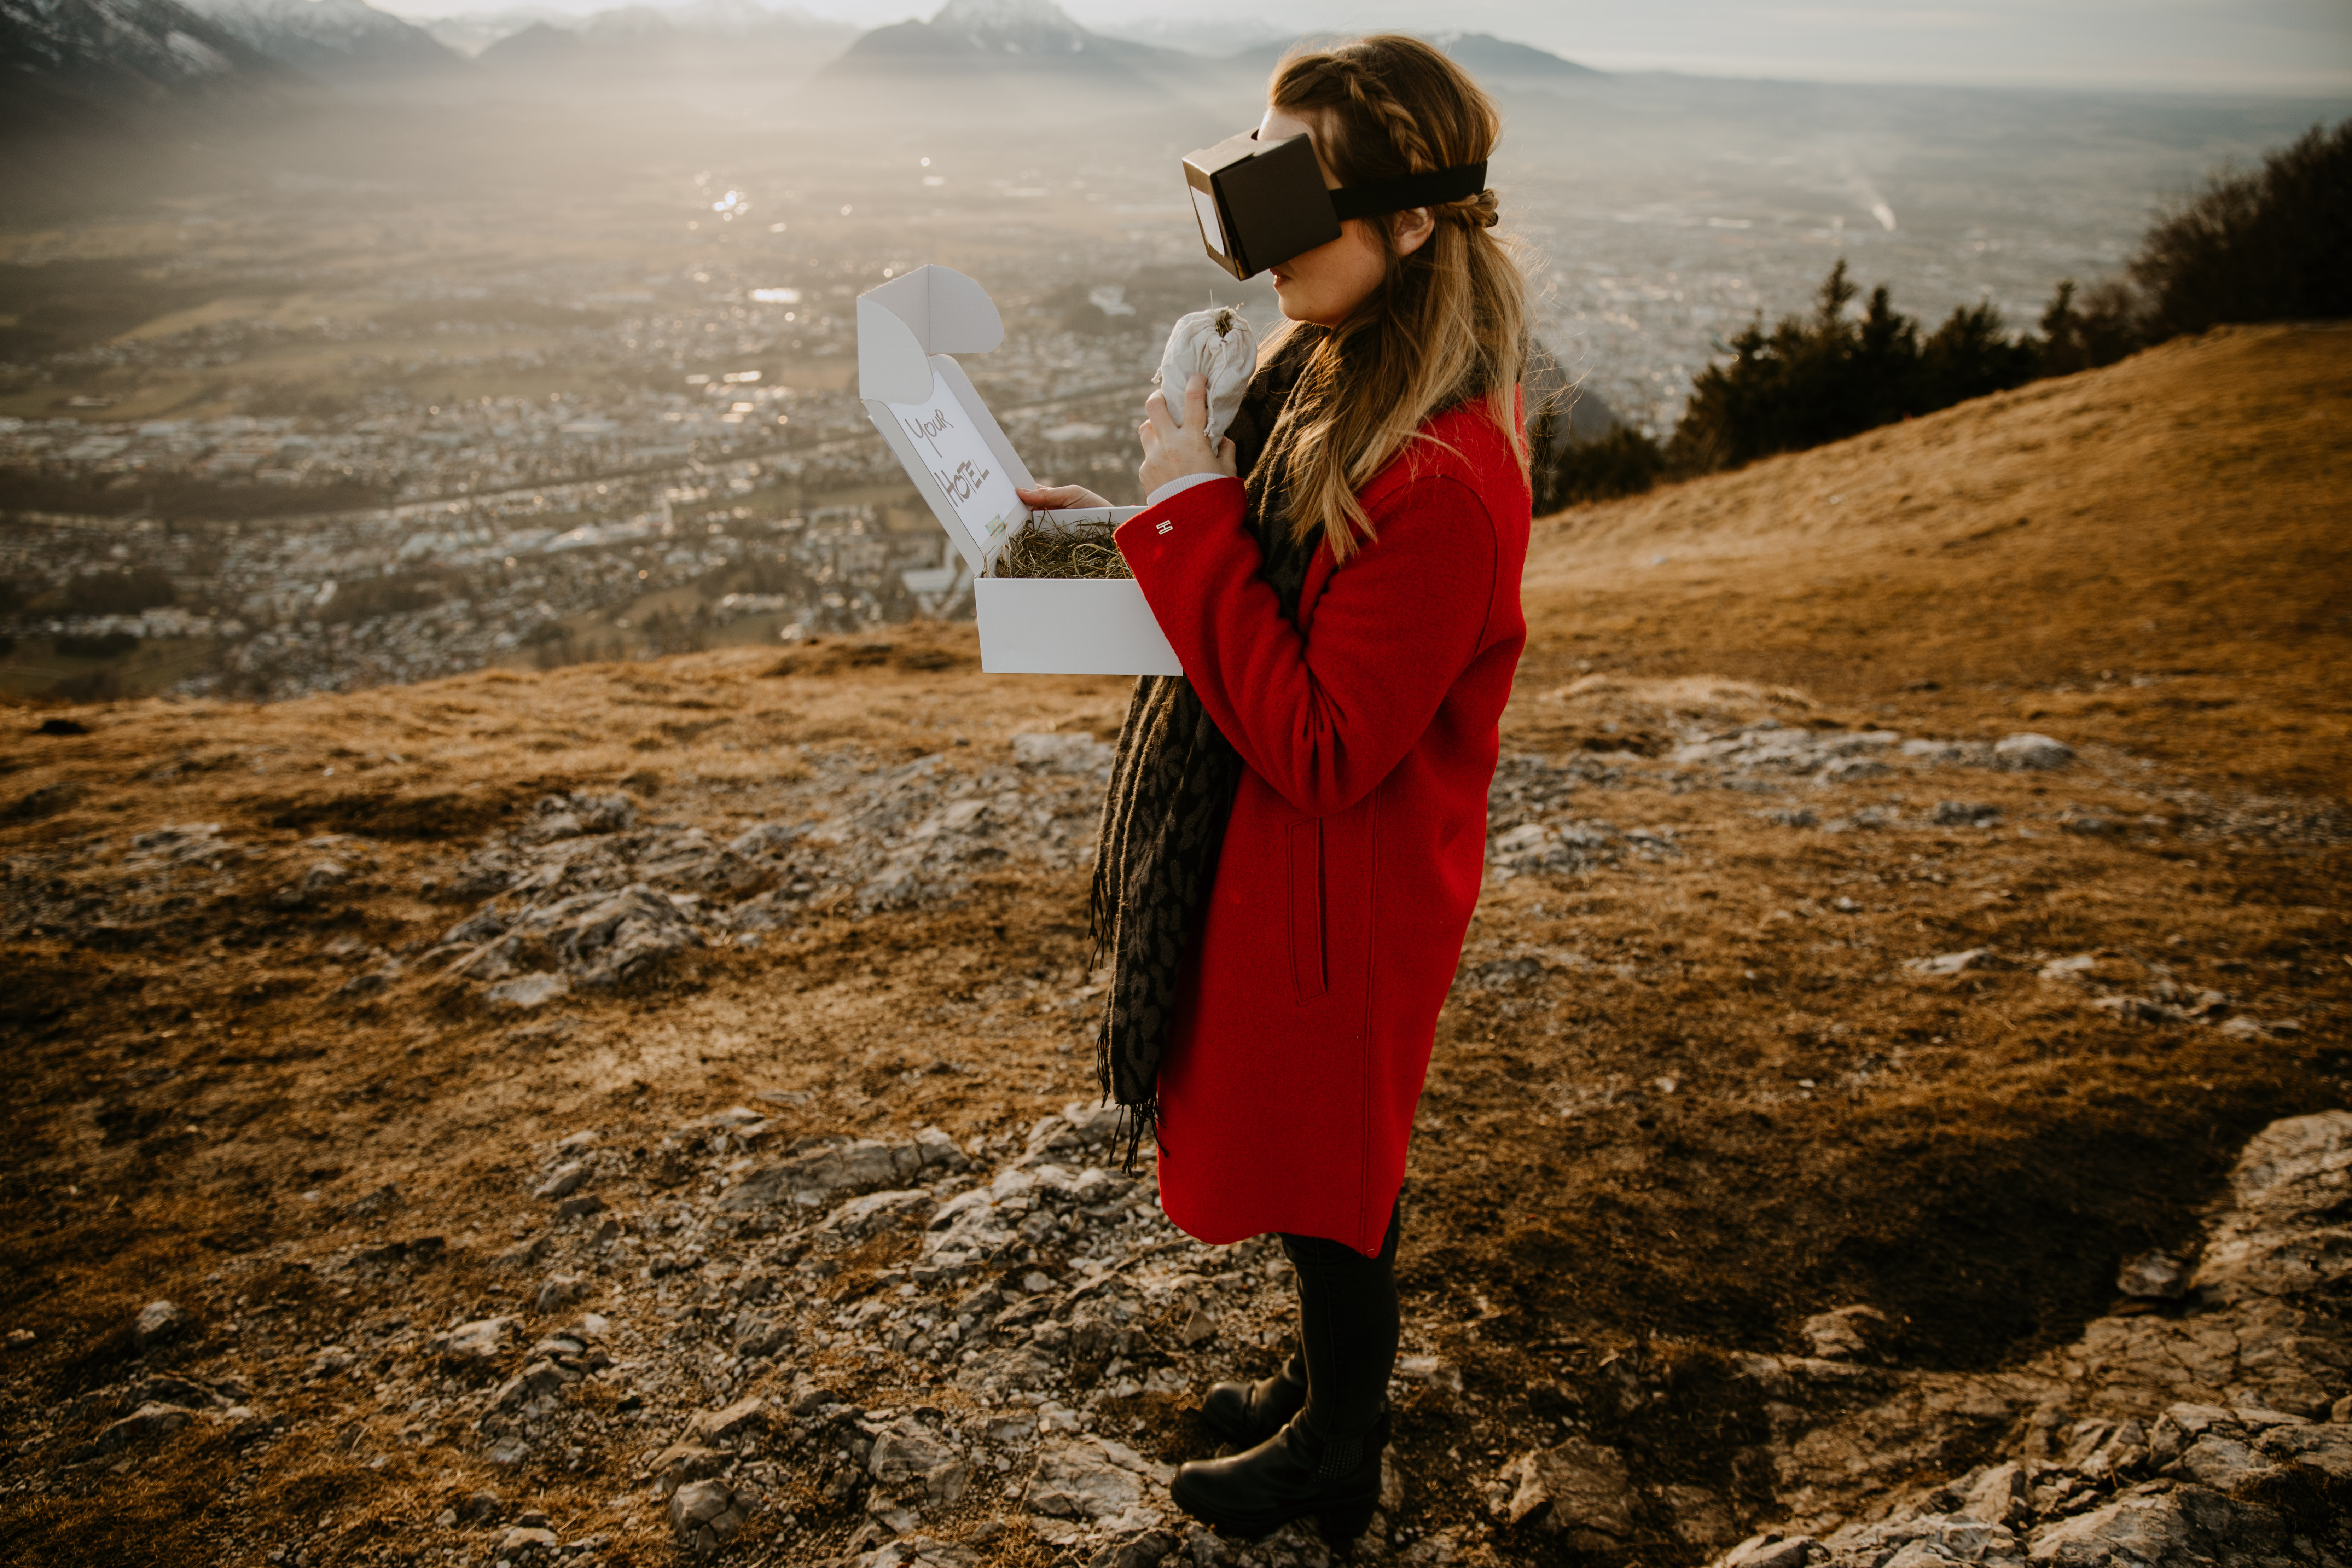 Multisensory VR Experiences in Destination Management